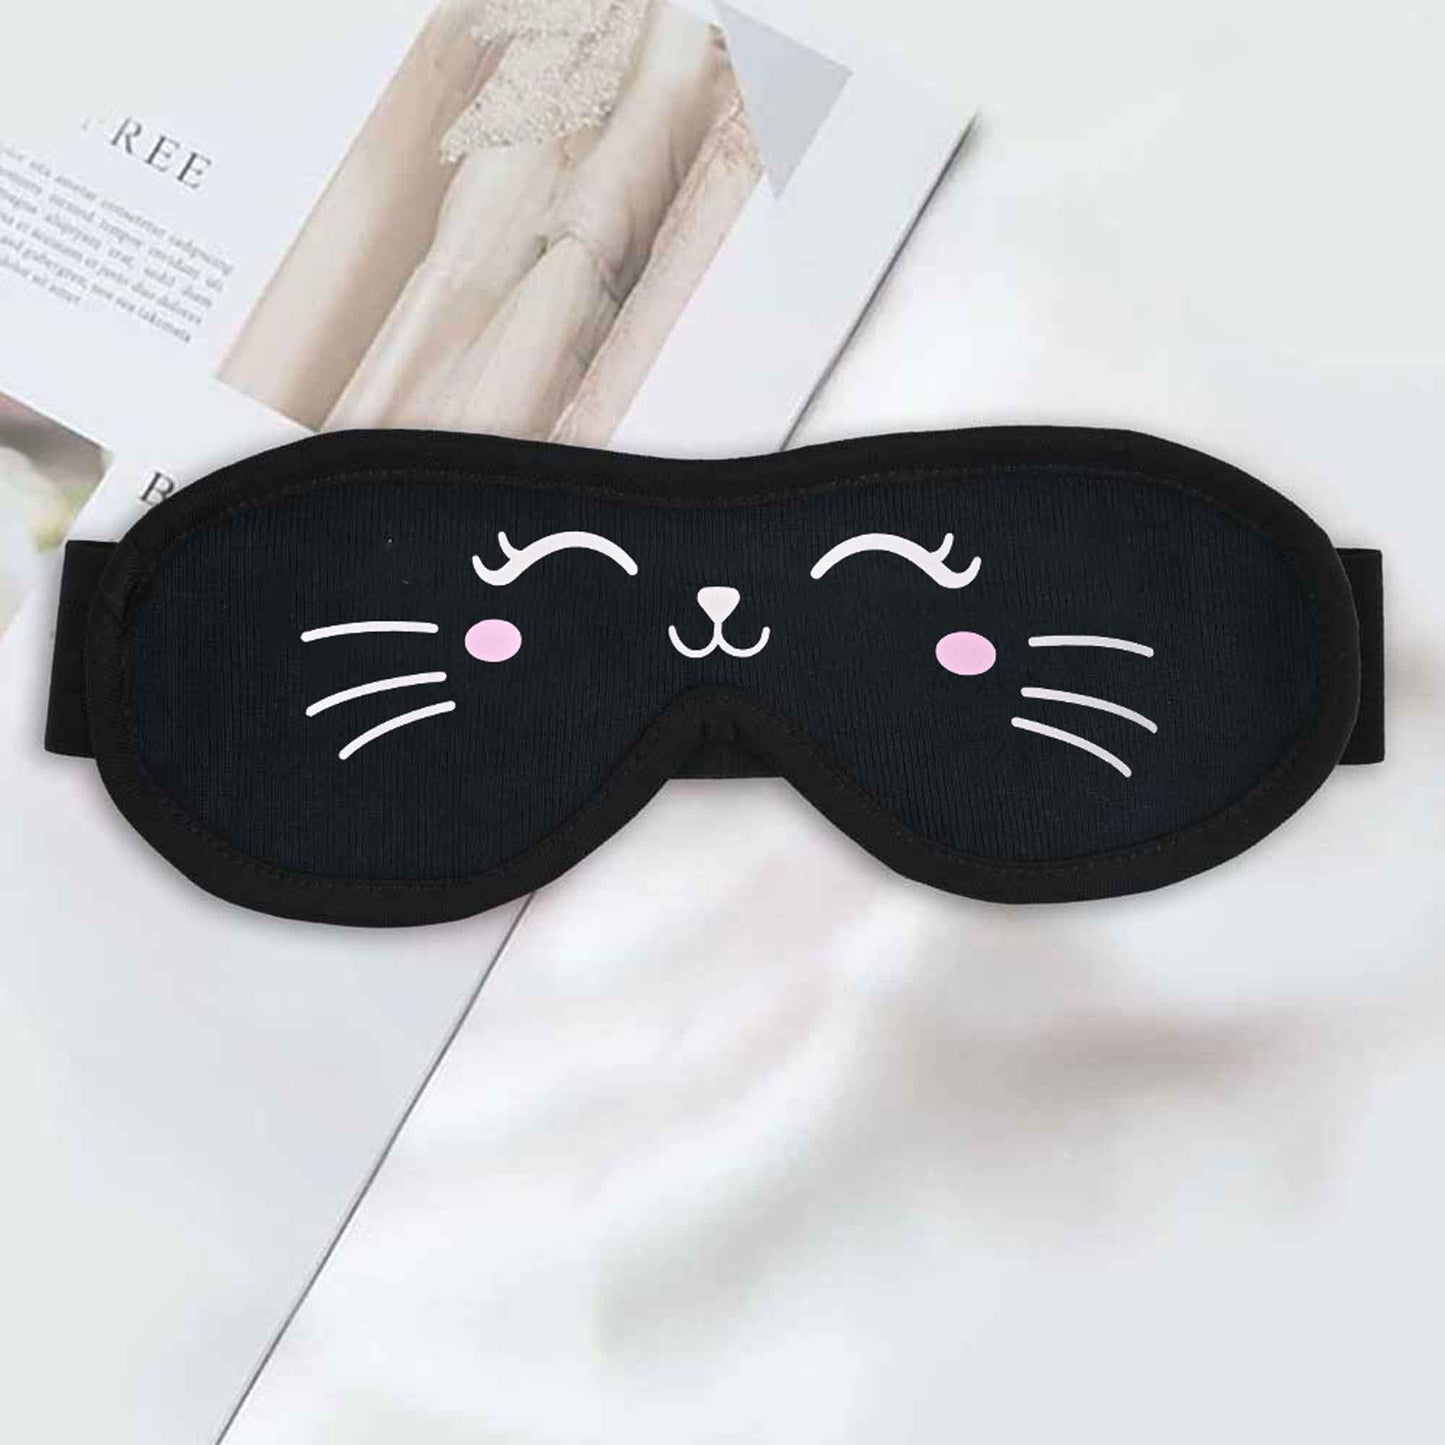 Polo Republica 'Sustainable Comfort' Eye Mask for Sleeping Eyewear Polo Republica Navy Sleeping Cat 